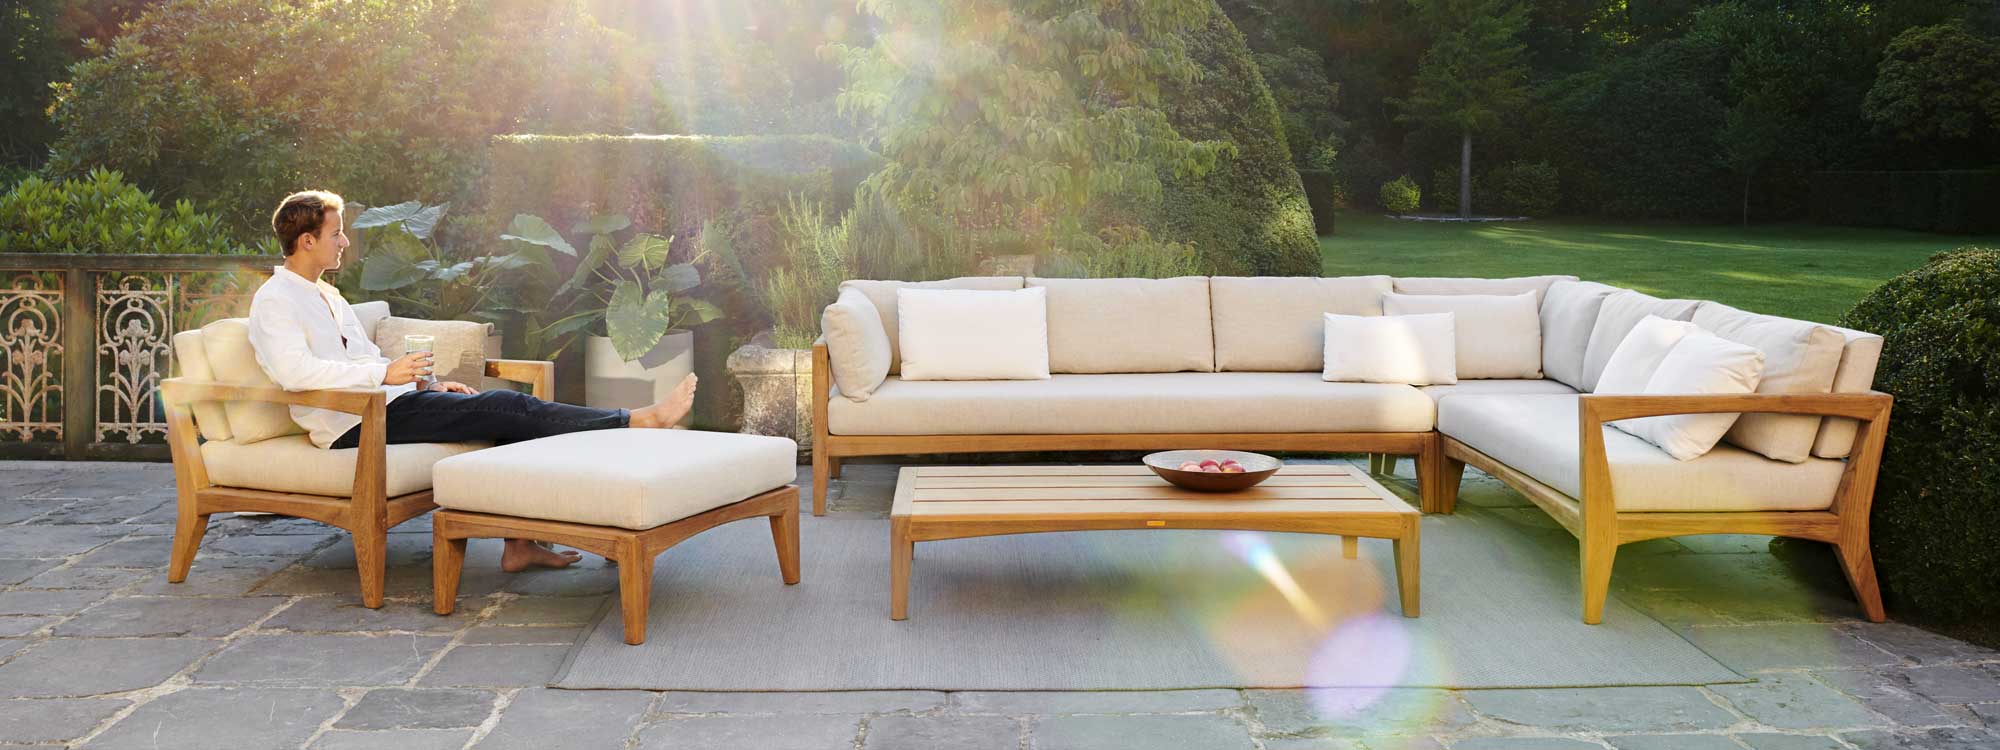 Zenhit is a luxury teak garden sofa designed by Kris Van Puyvelde for Royal Botania